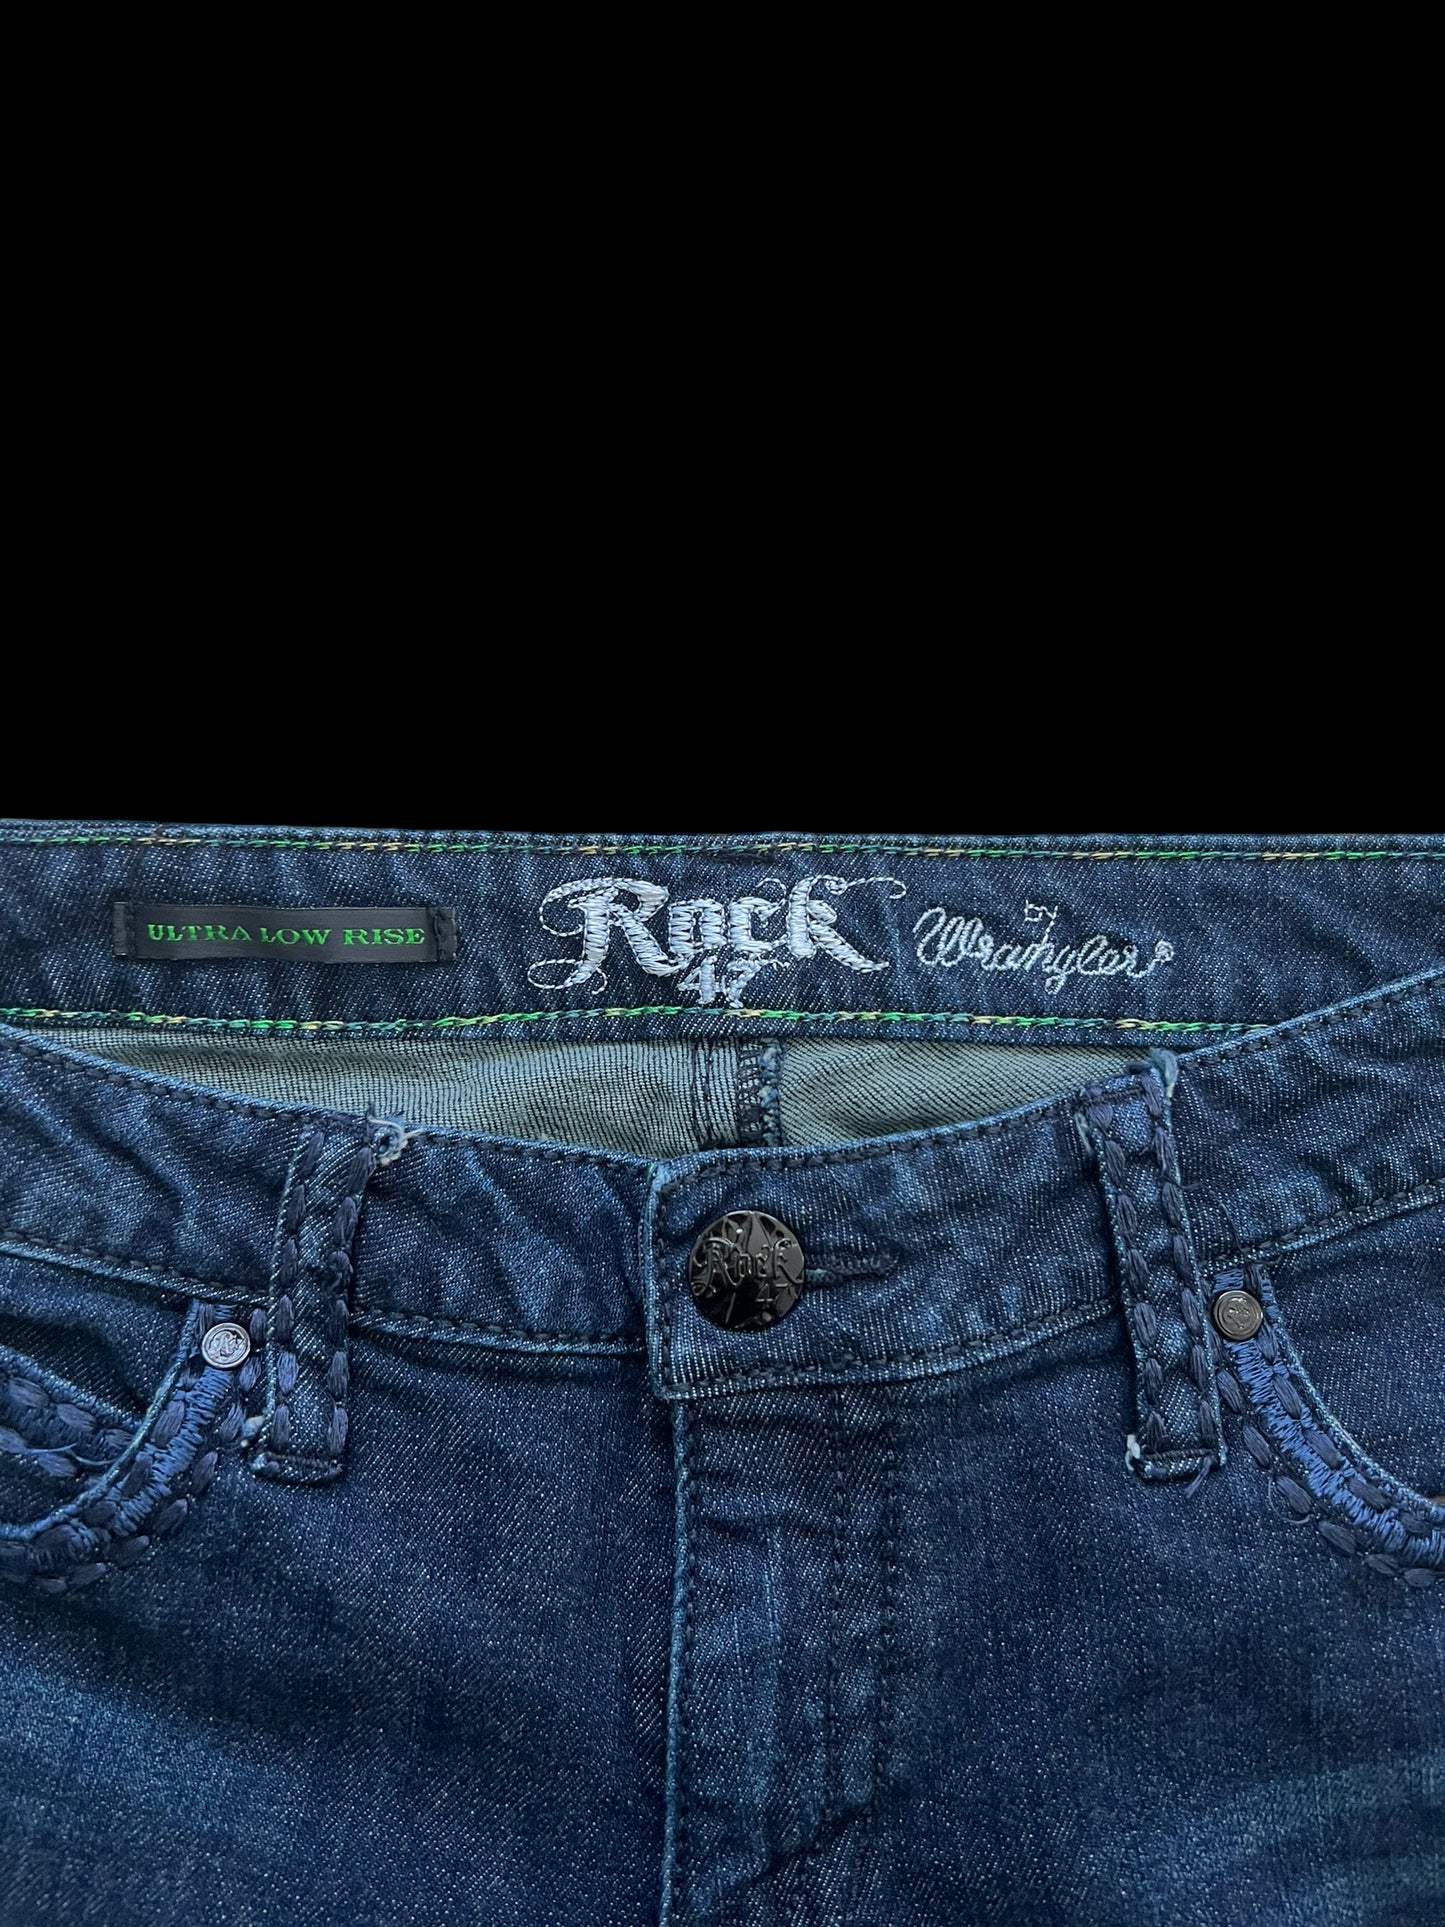 Rock Wrangler jeans